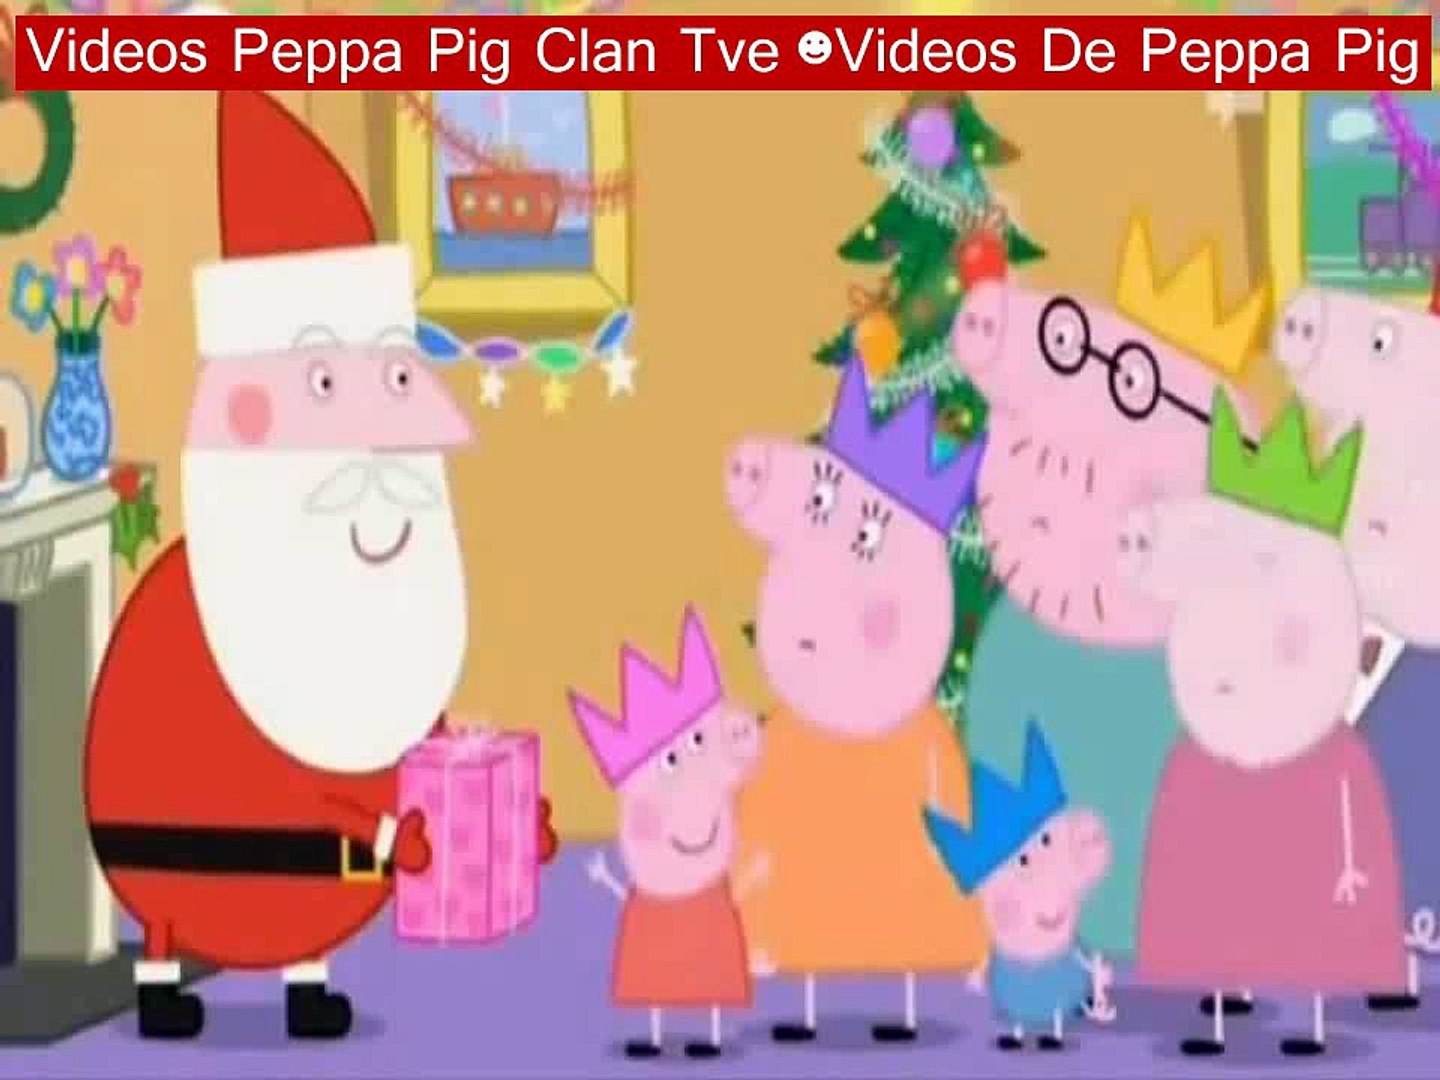 Videos Peppa Pig Clan Tve ☻Videos De Peppa Pig - video Dailymotion